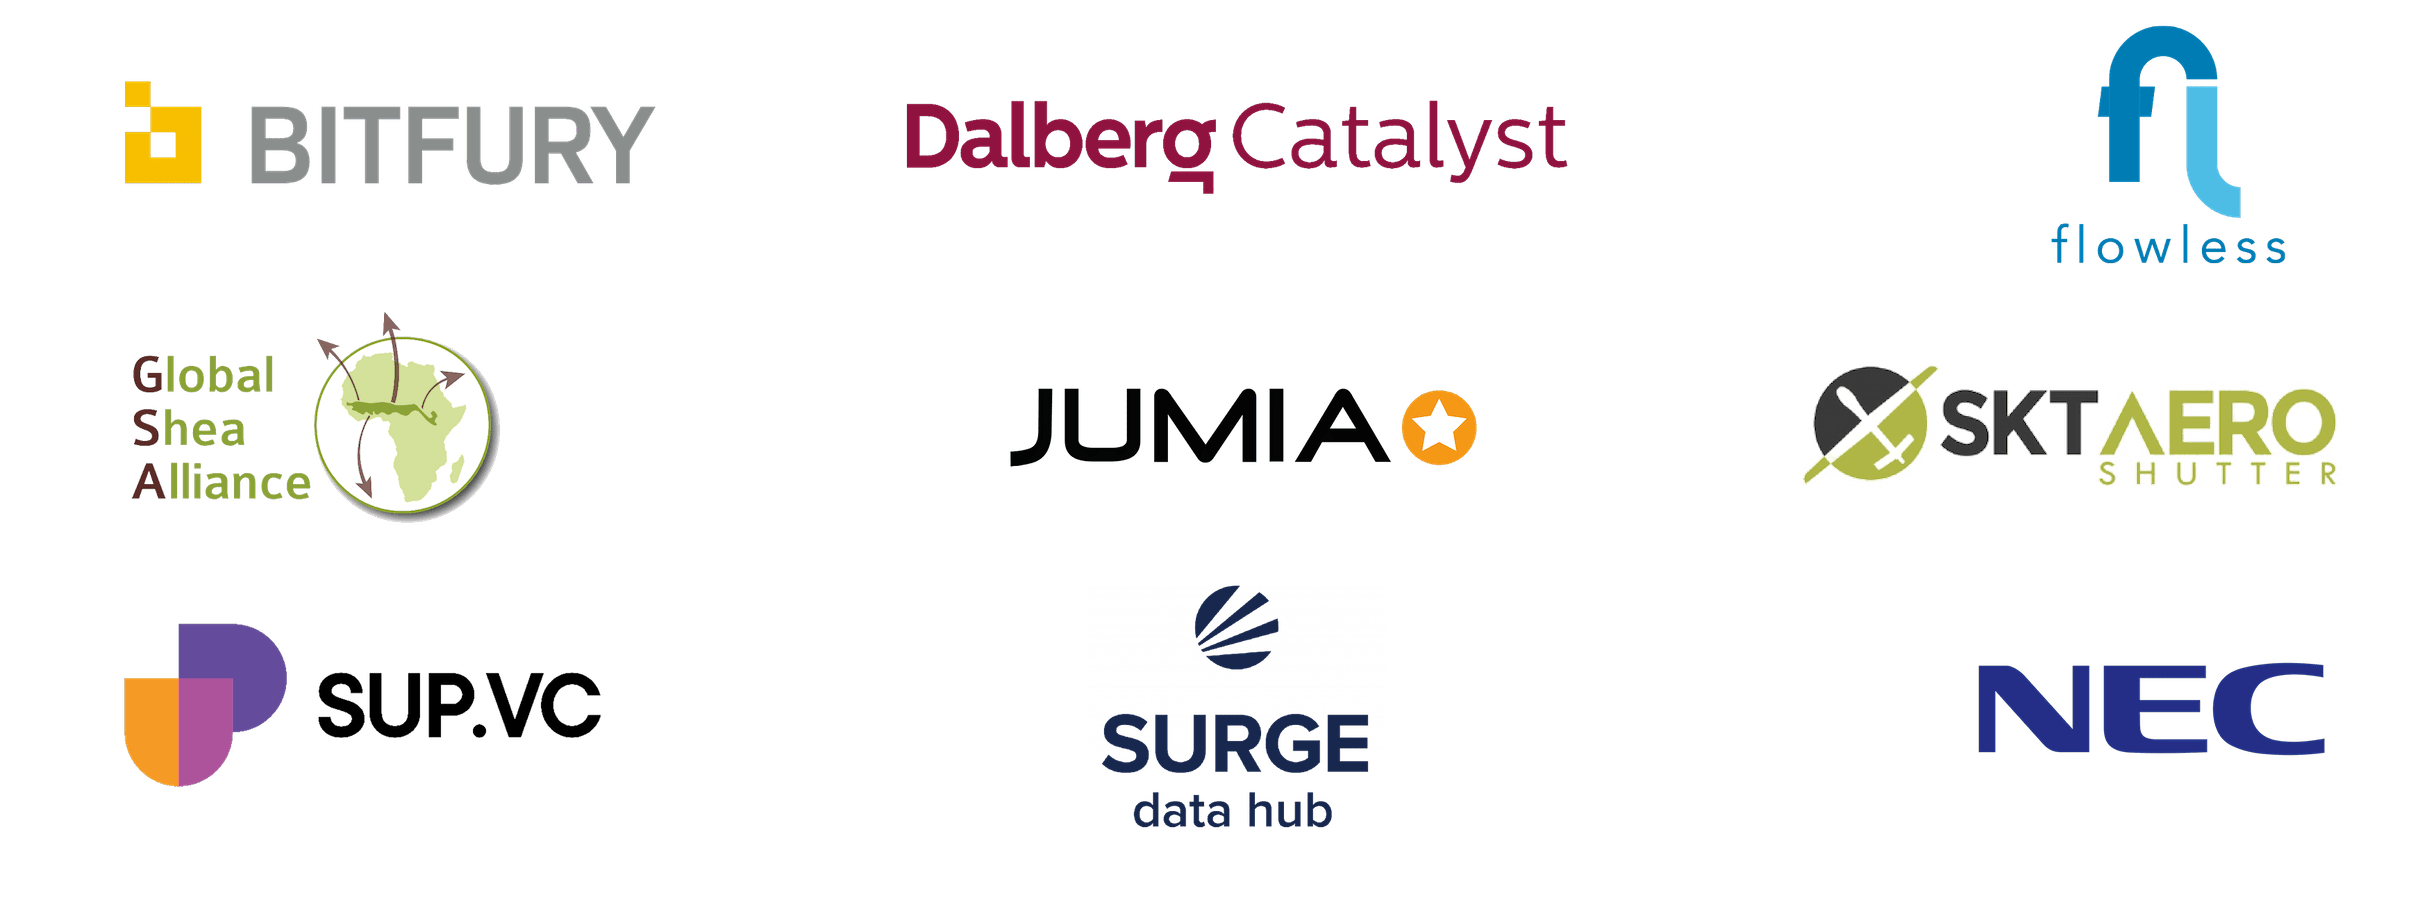 imagen de los siguientes logotipos: Bitfury, Dalberg Catalyst, FlowLess, Global Shea Alliance, Jumia, NEC, SKT AeroShutter, SUP.VC, Surge Data Hub